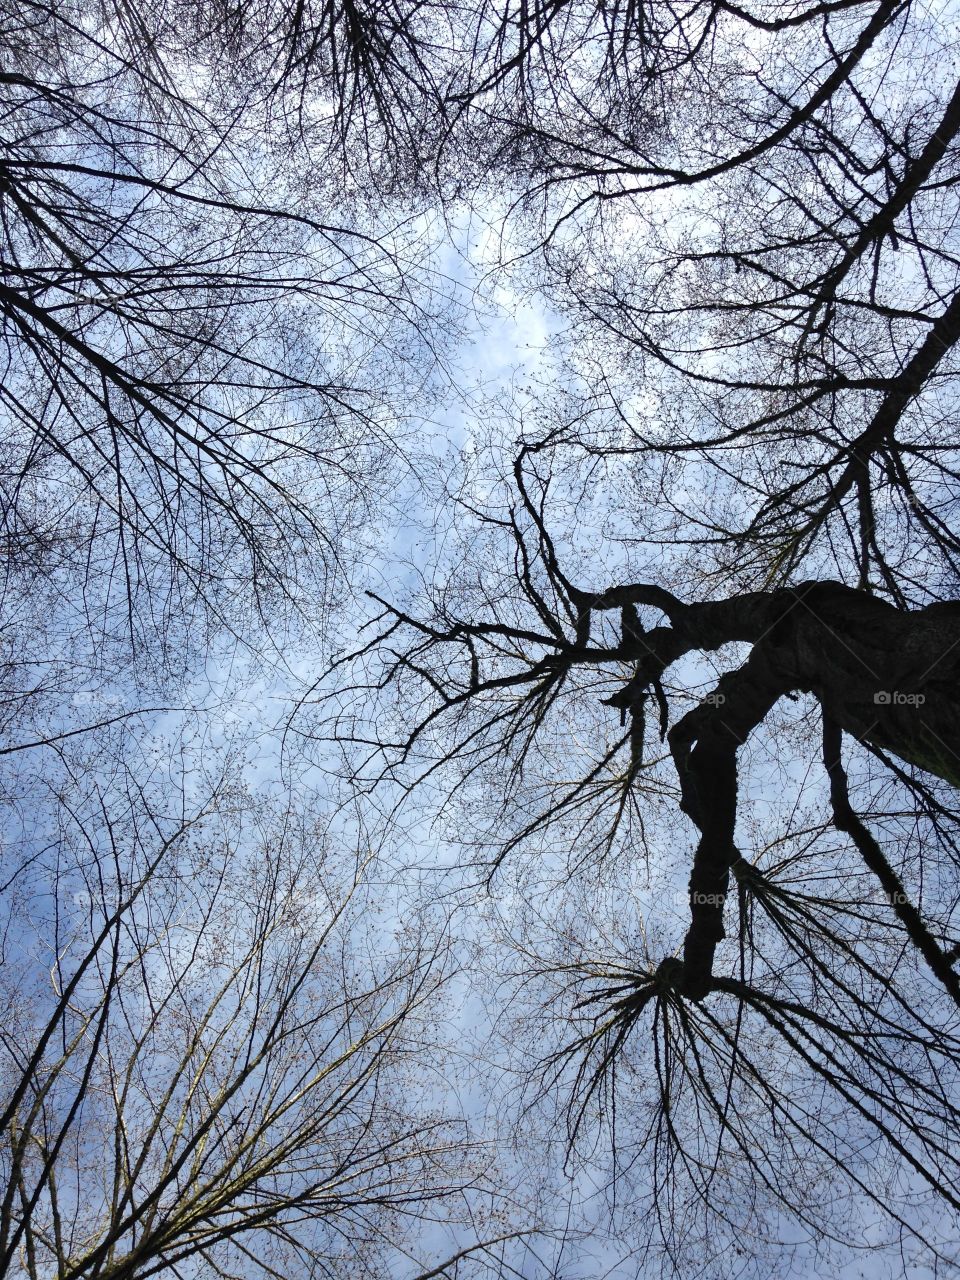 Sky and treetops